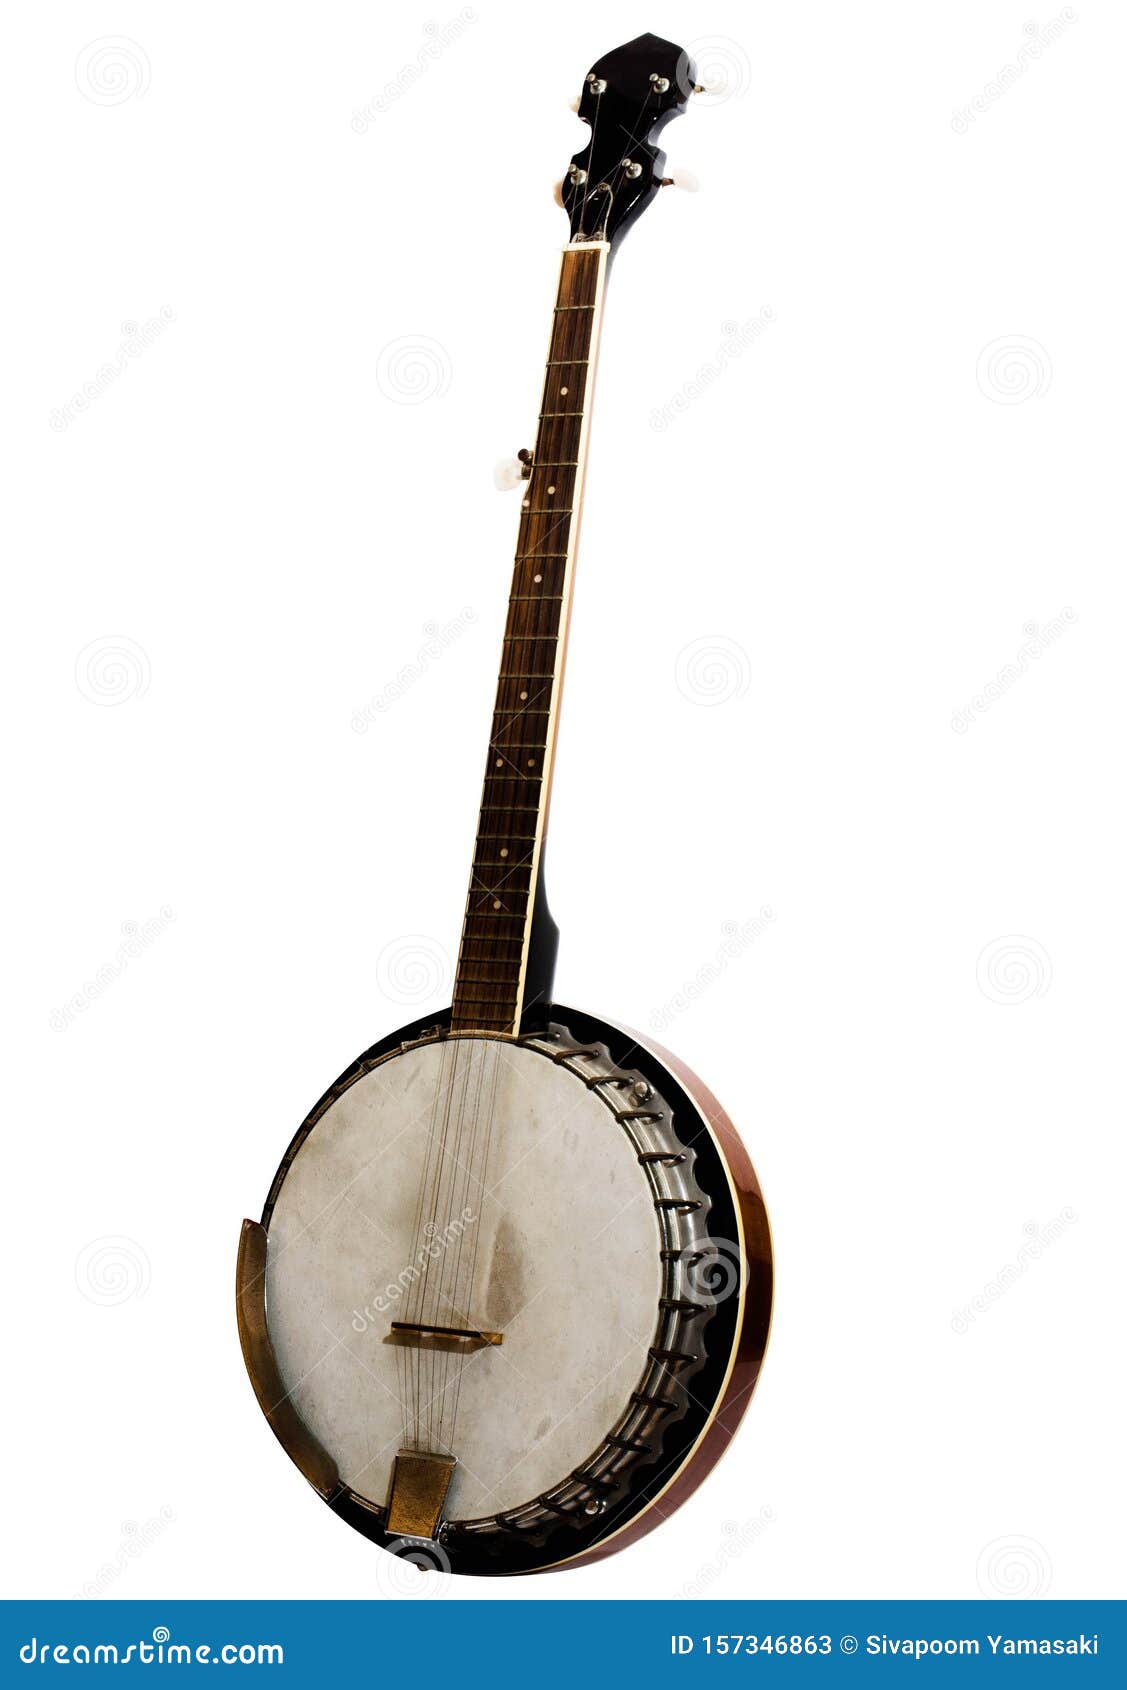 vintage bluegrass banjo  on white background